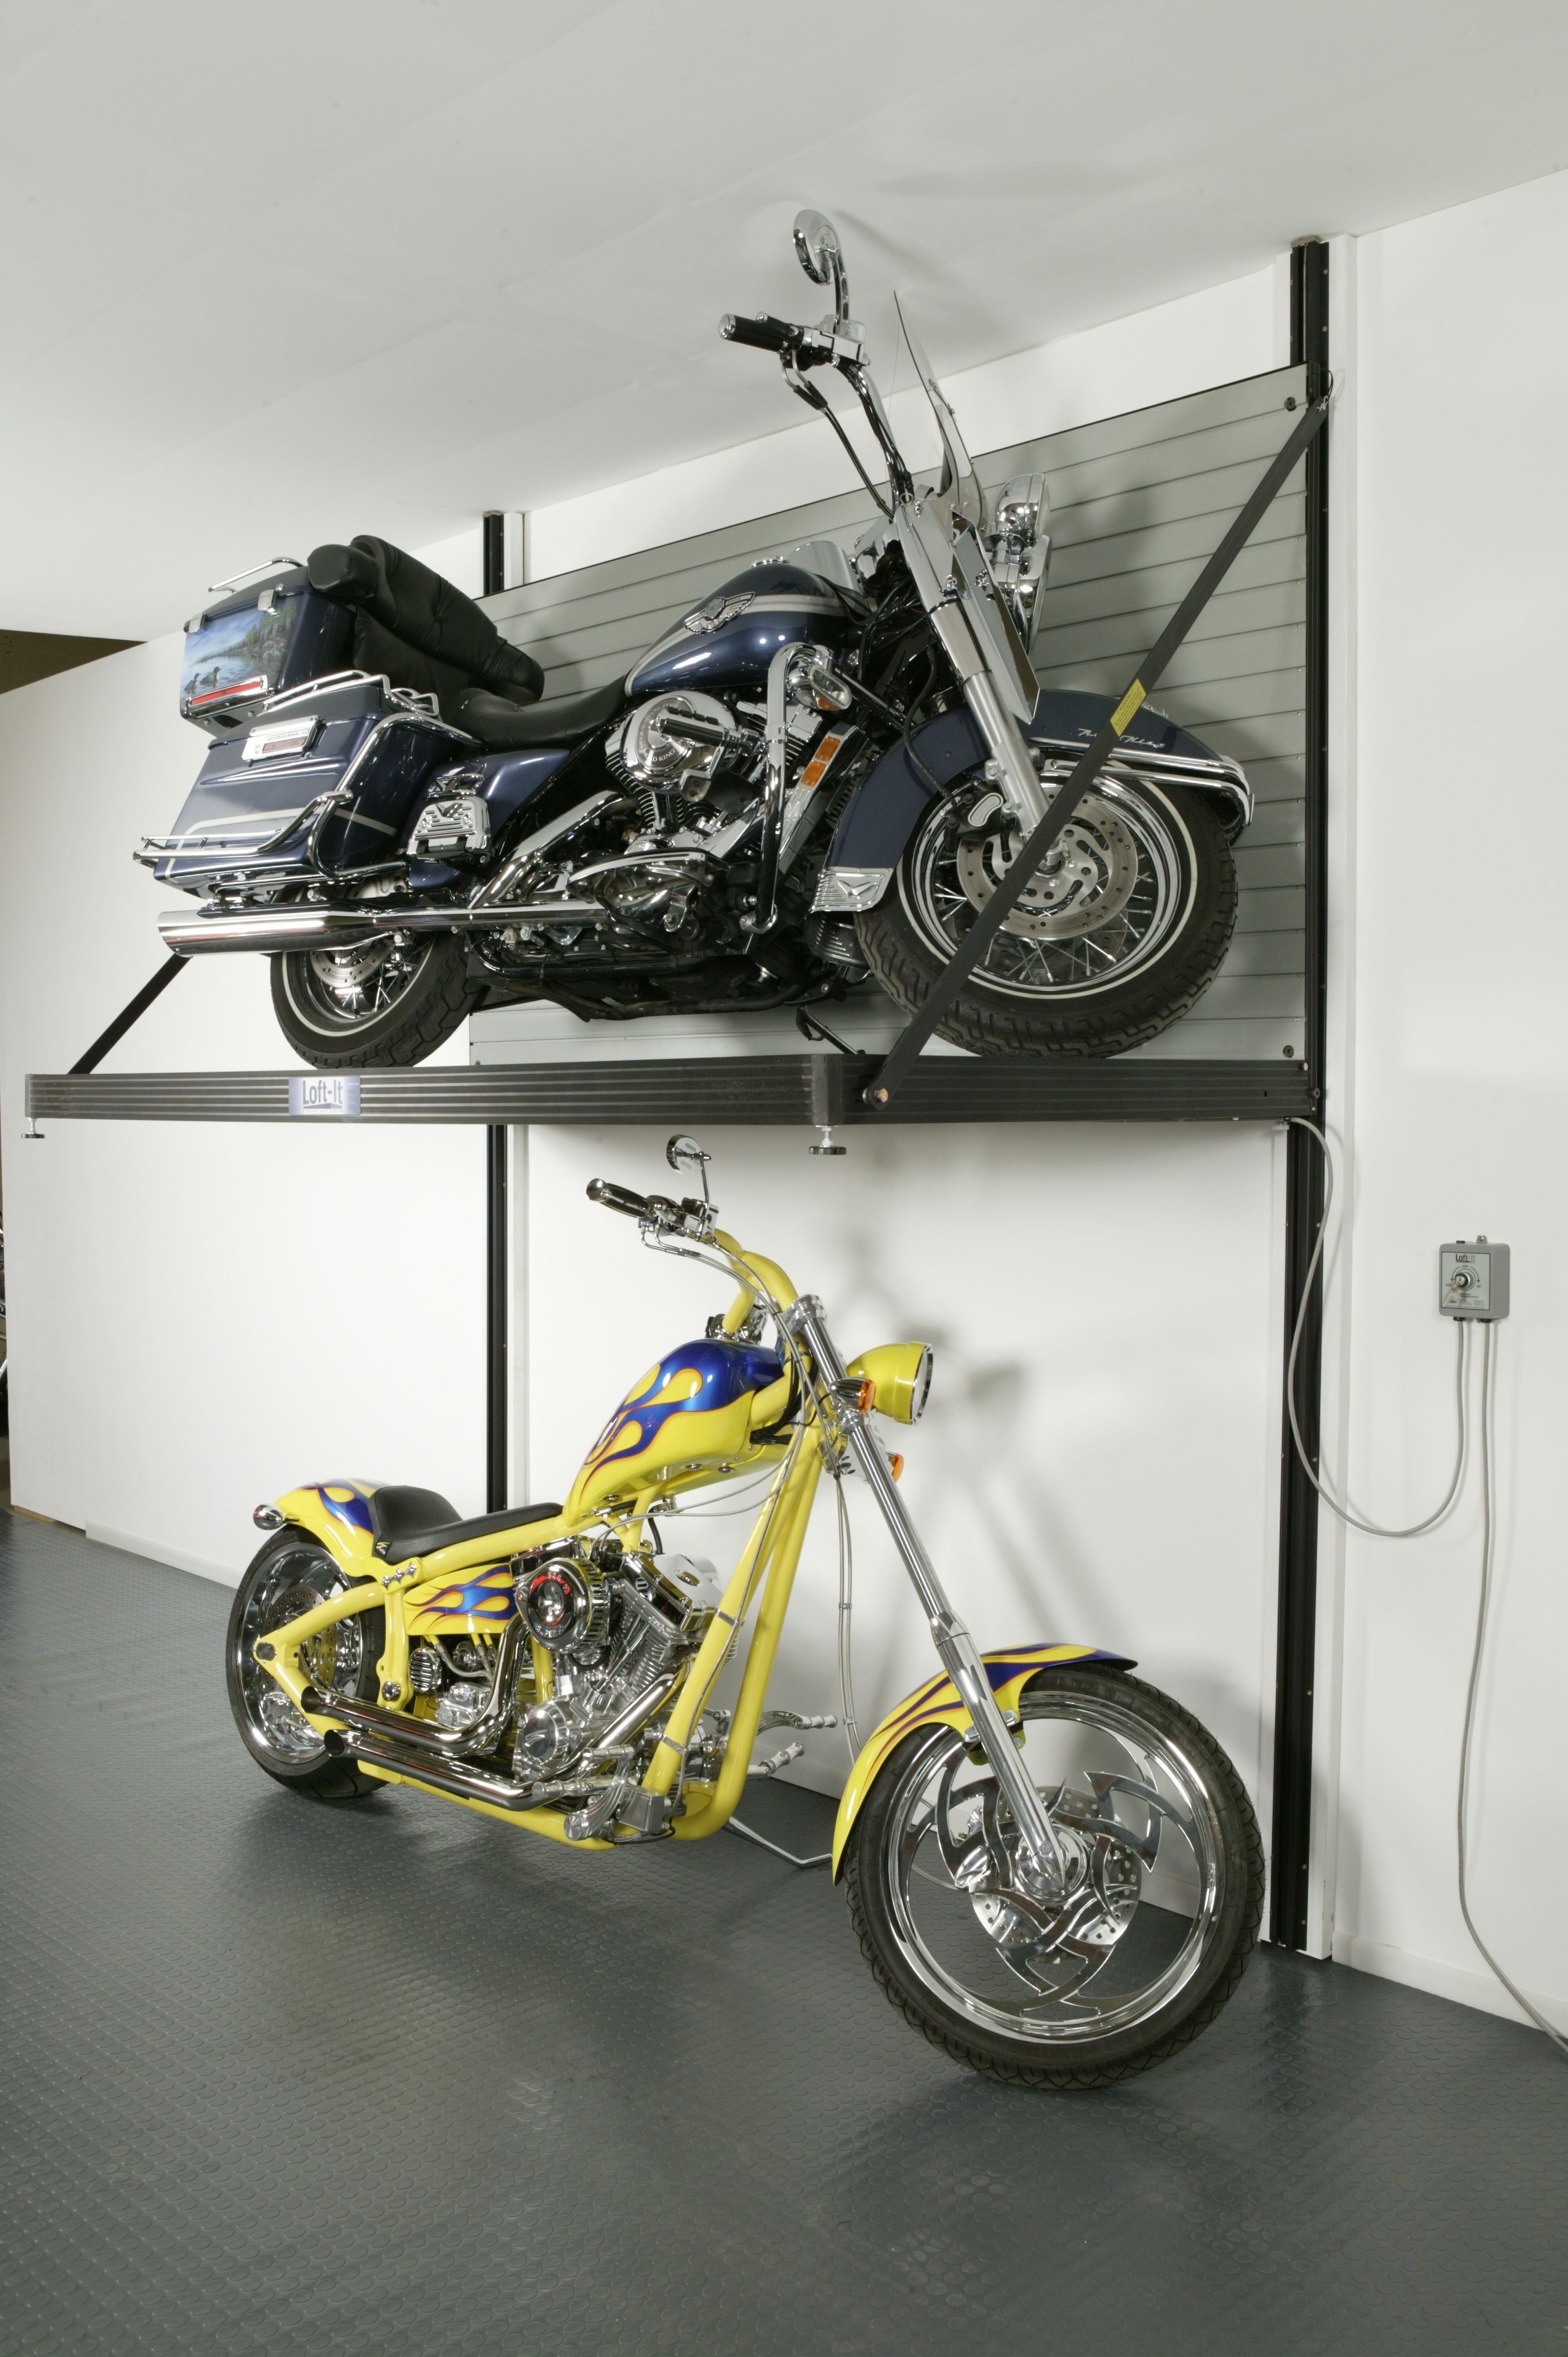 Выбираем место для хранения мотоцикла